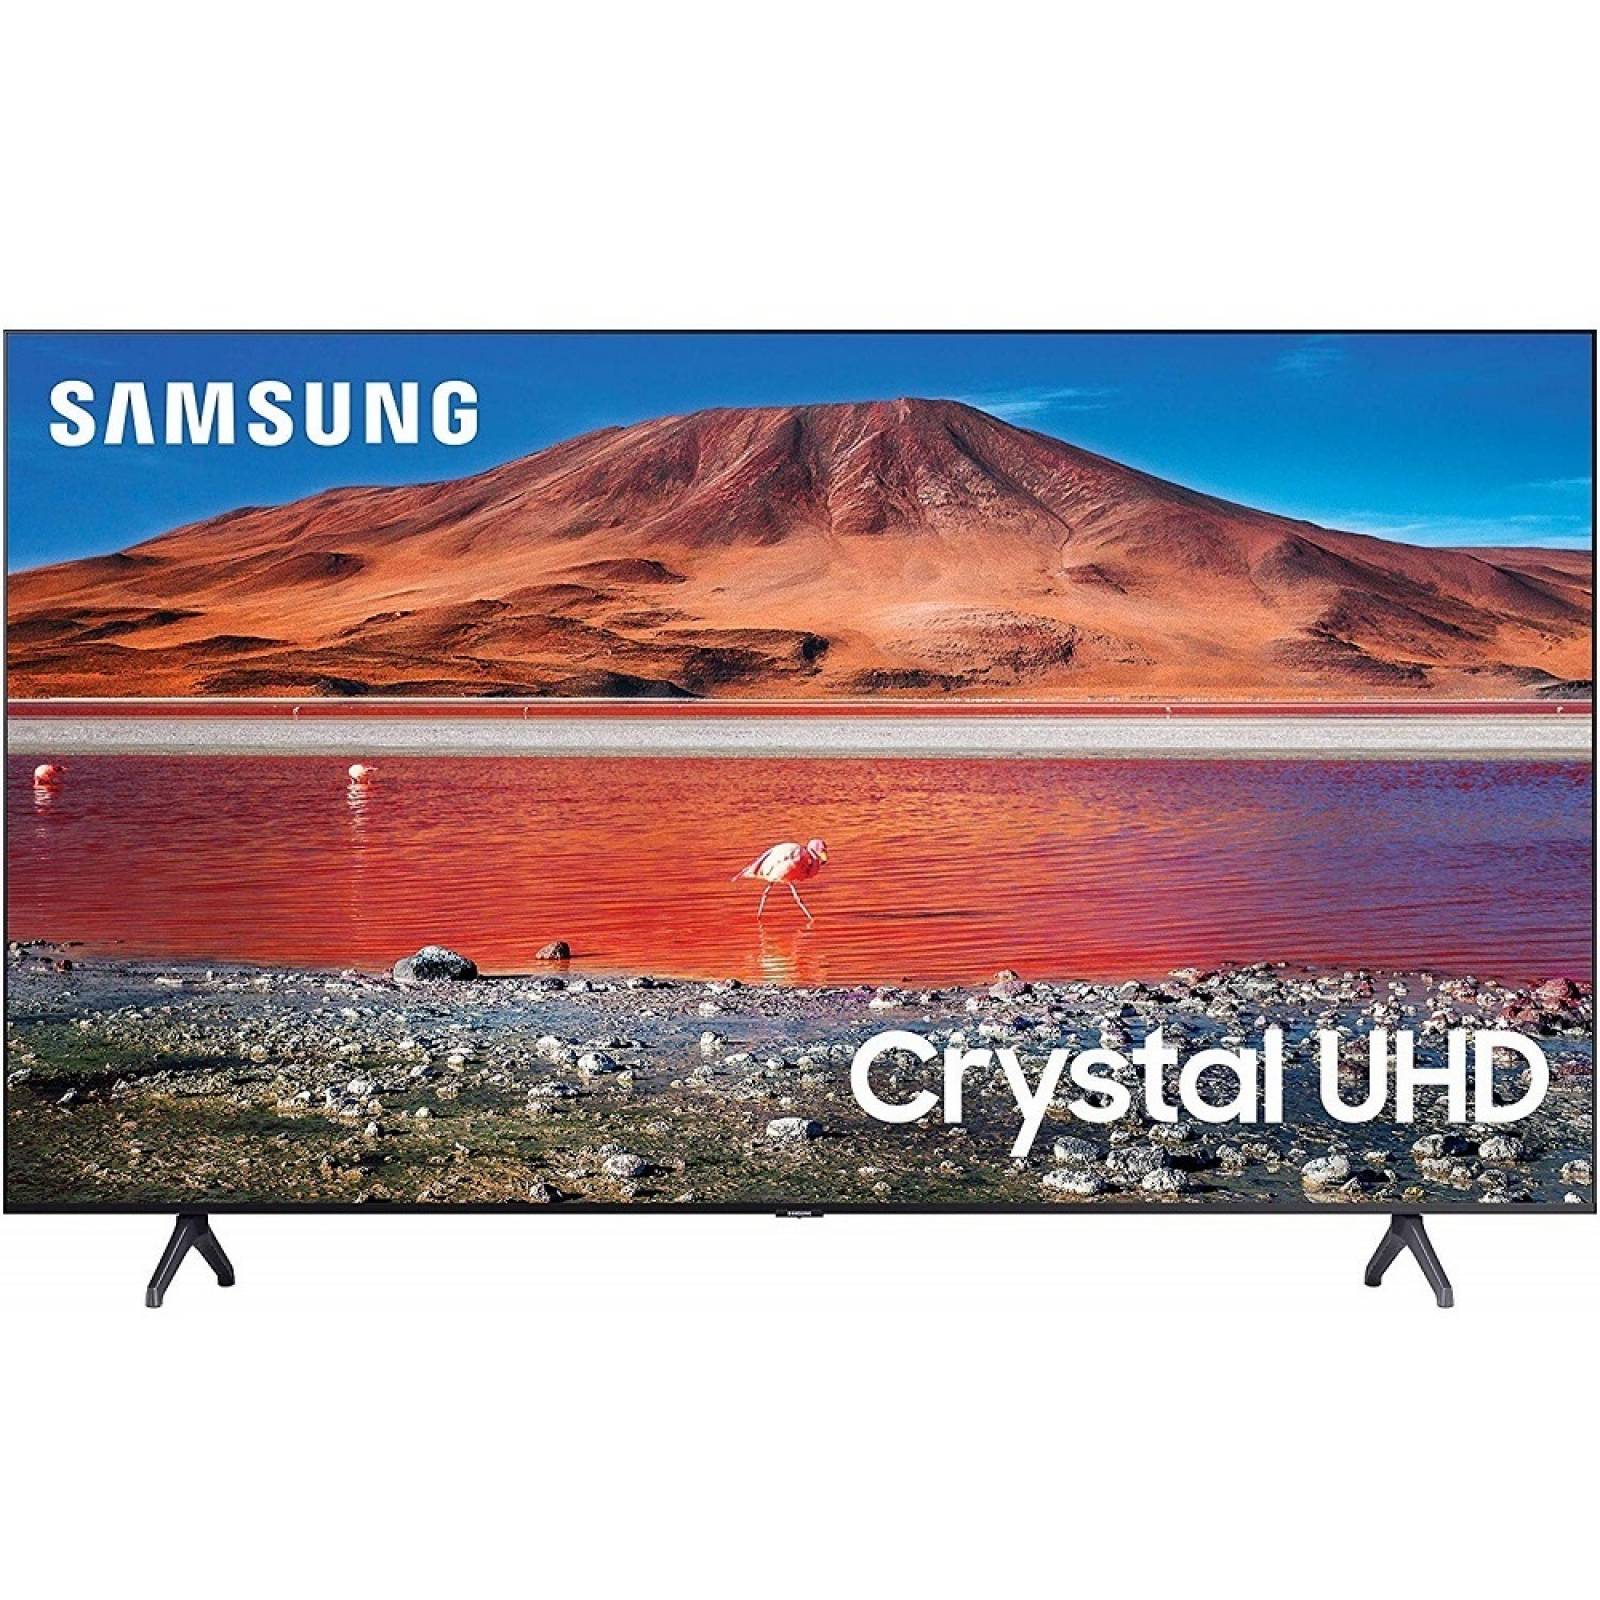 Smart TV Samsung 65 4K HDR10 Engine Crystal UN65TU7000